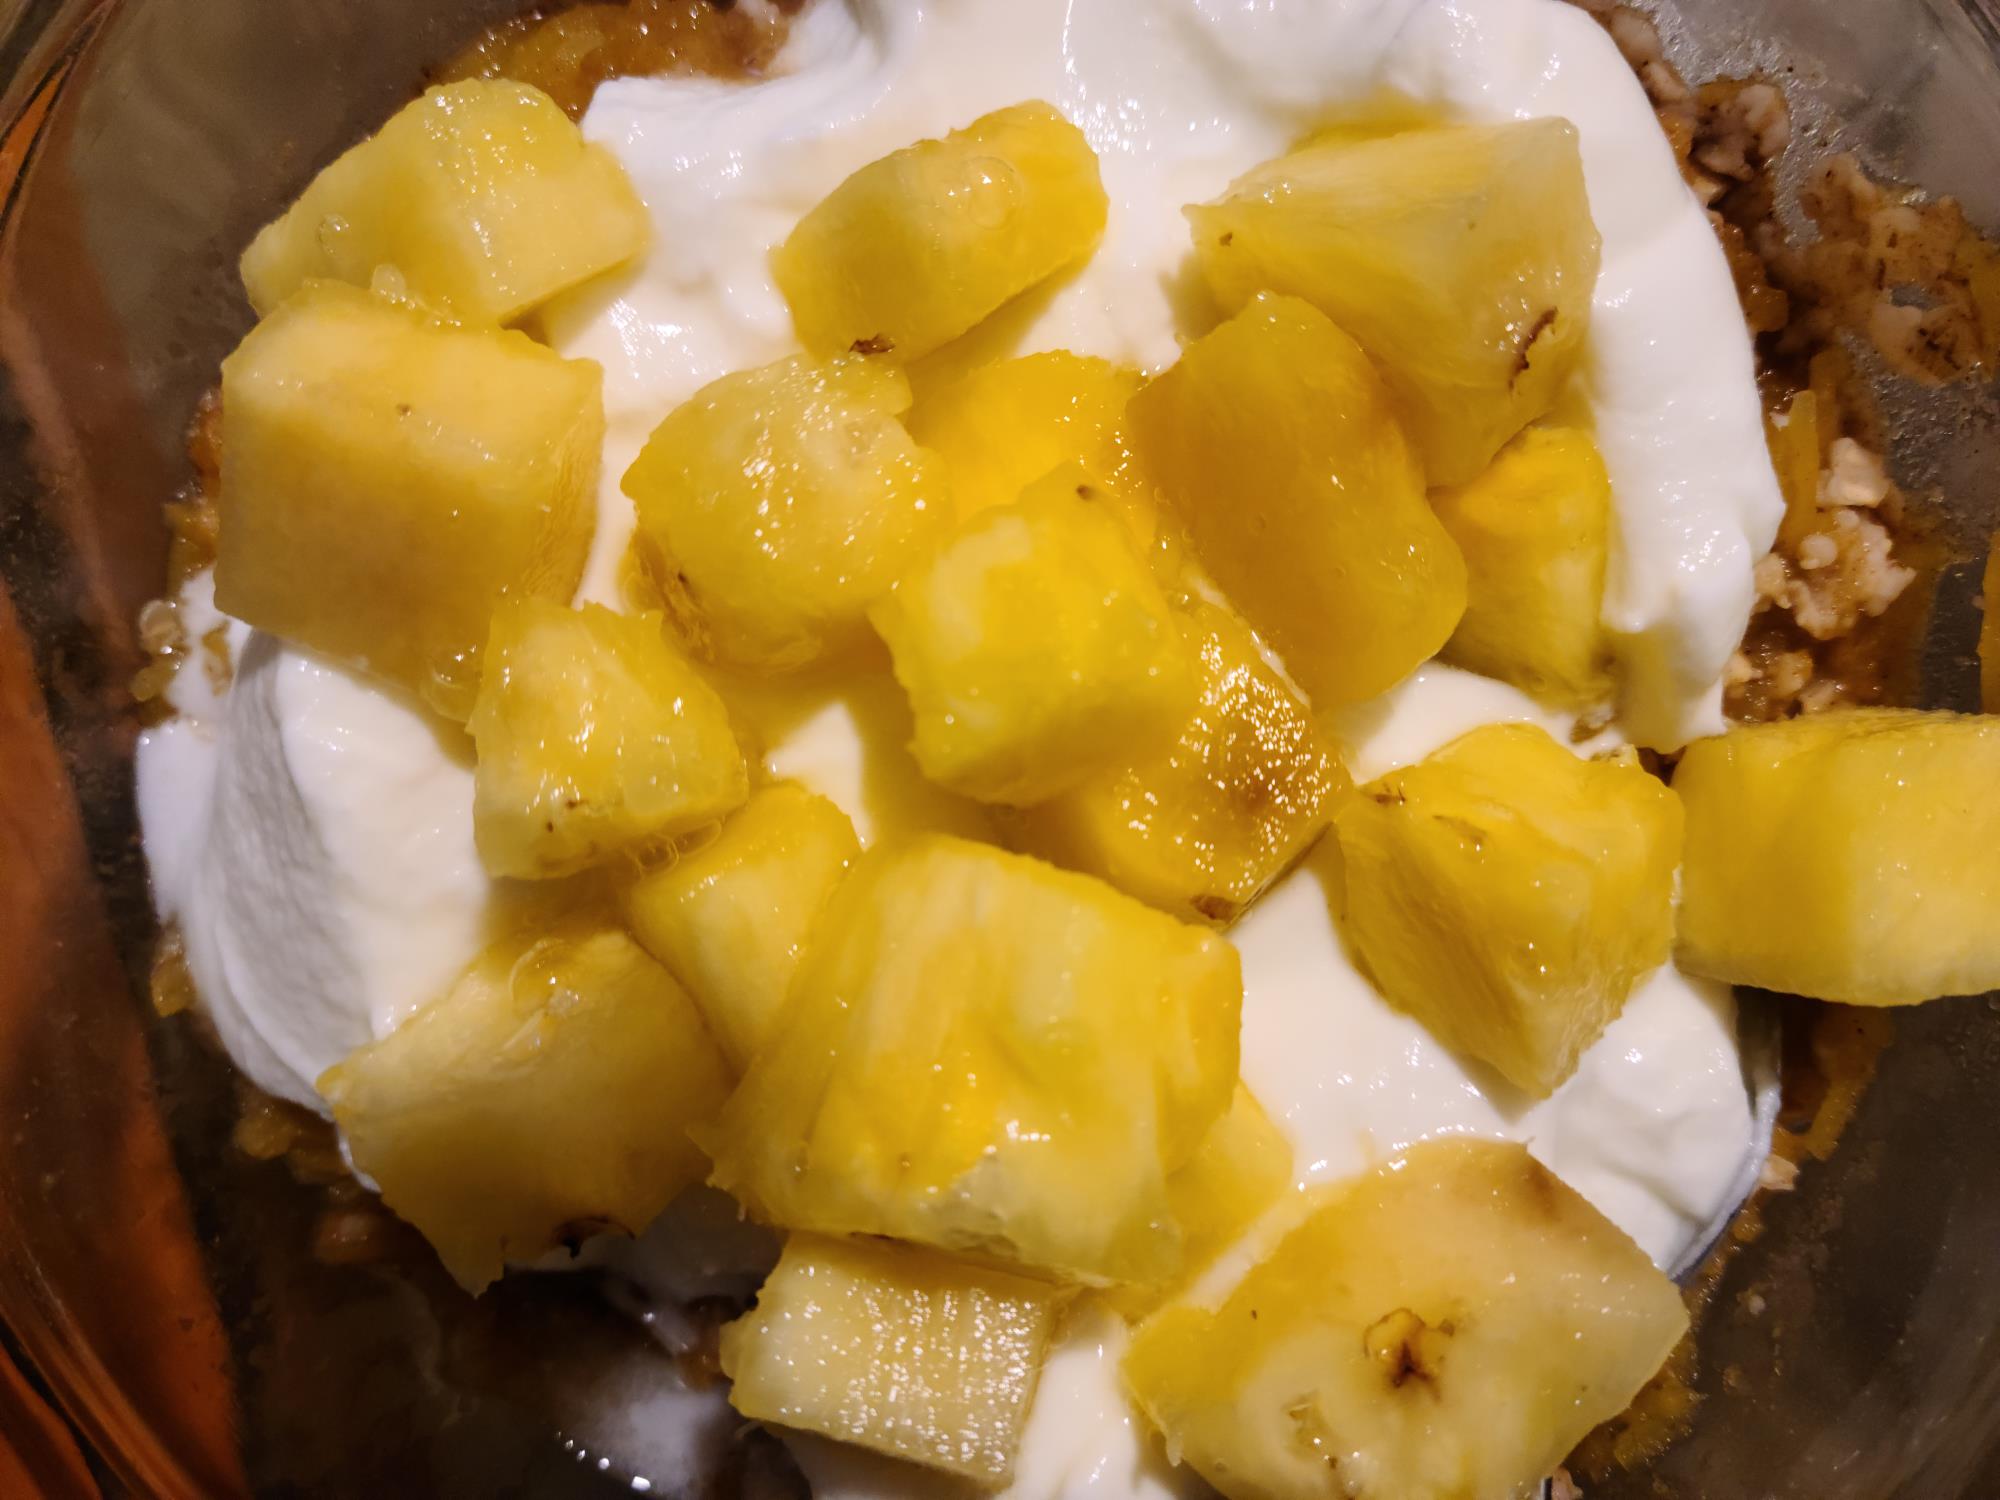 Oatmeal breakfast with pumpkin and pineapple and probiotic yogurt